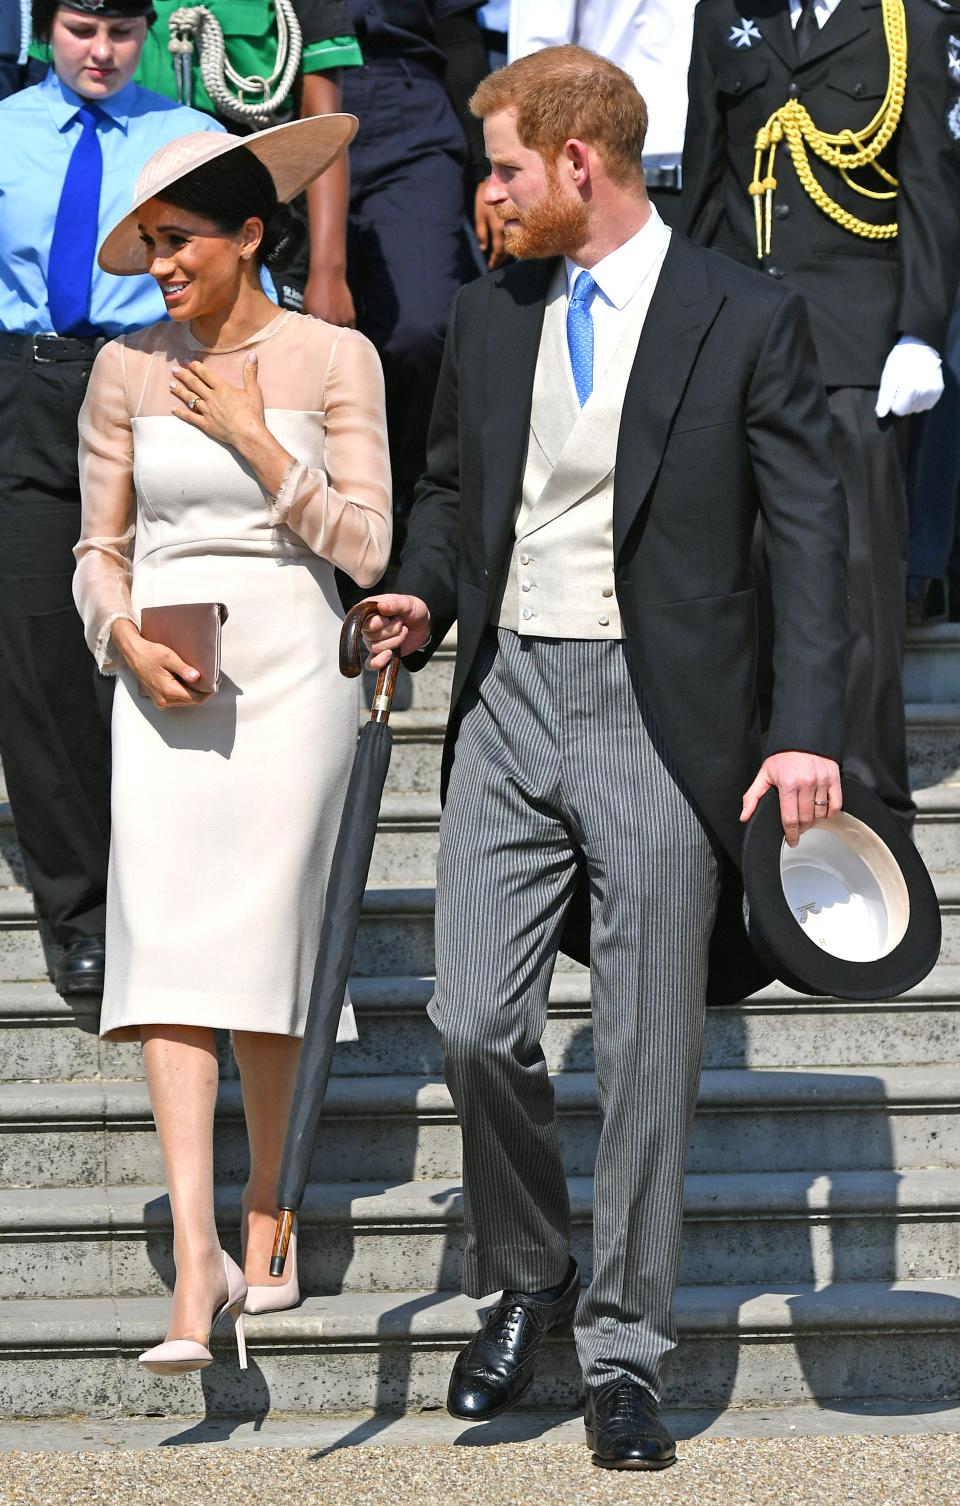 Newly married Meghan Markle and Prince Harry